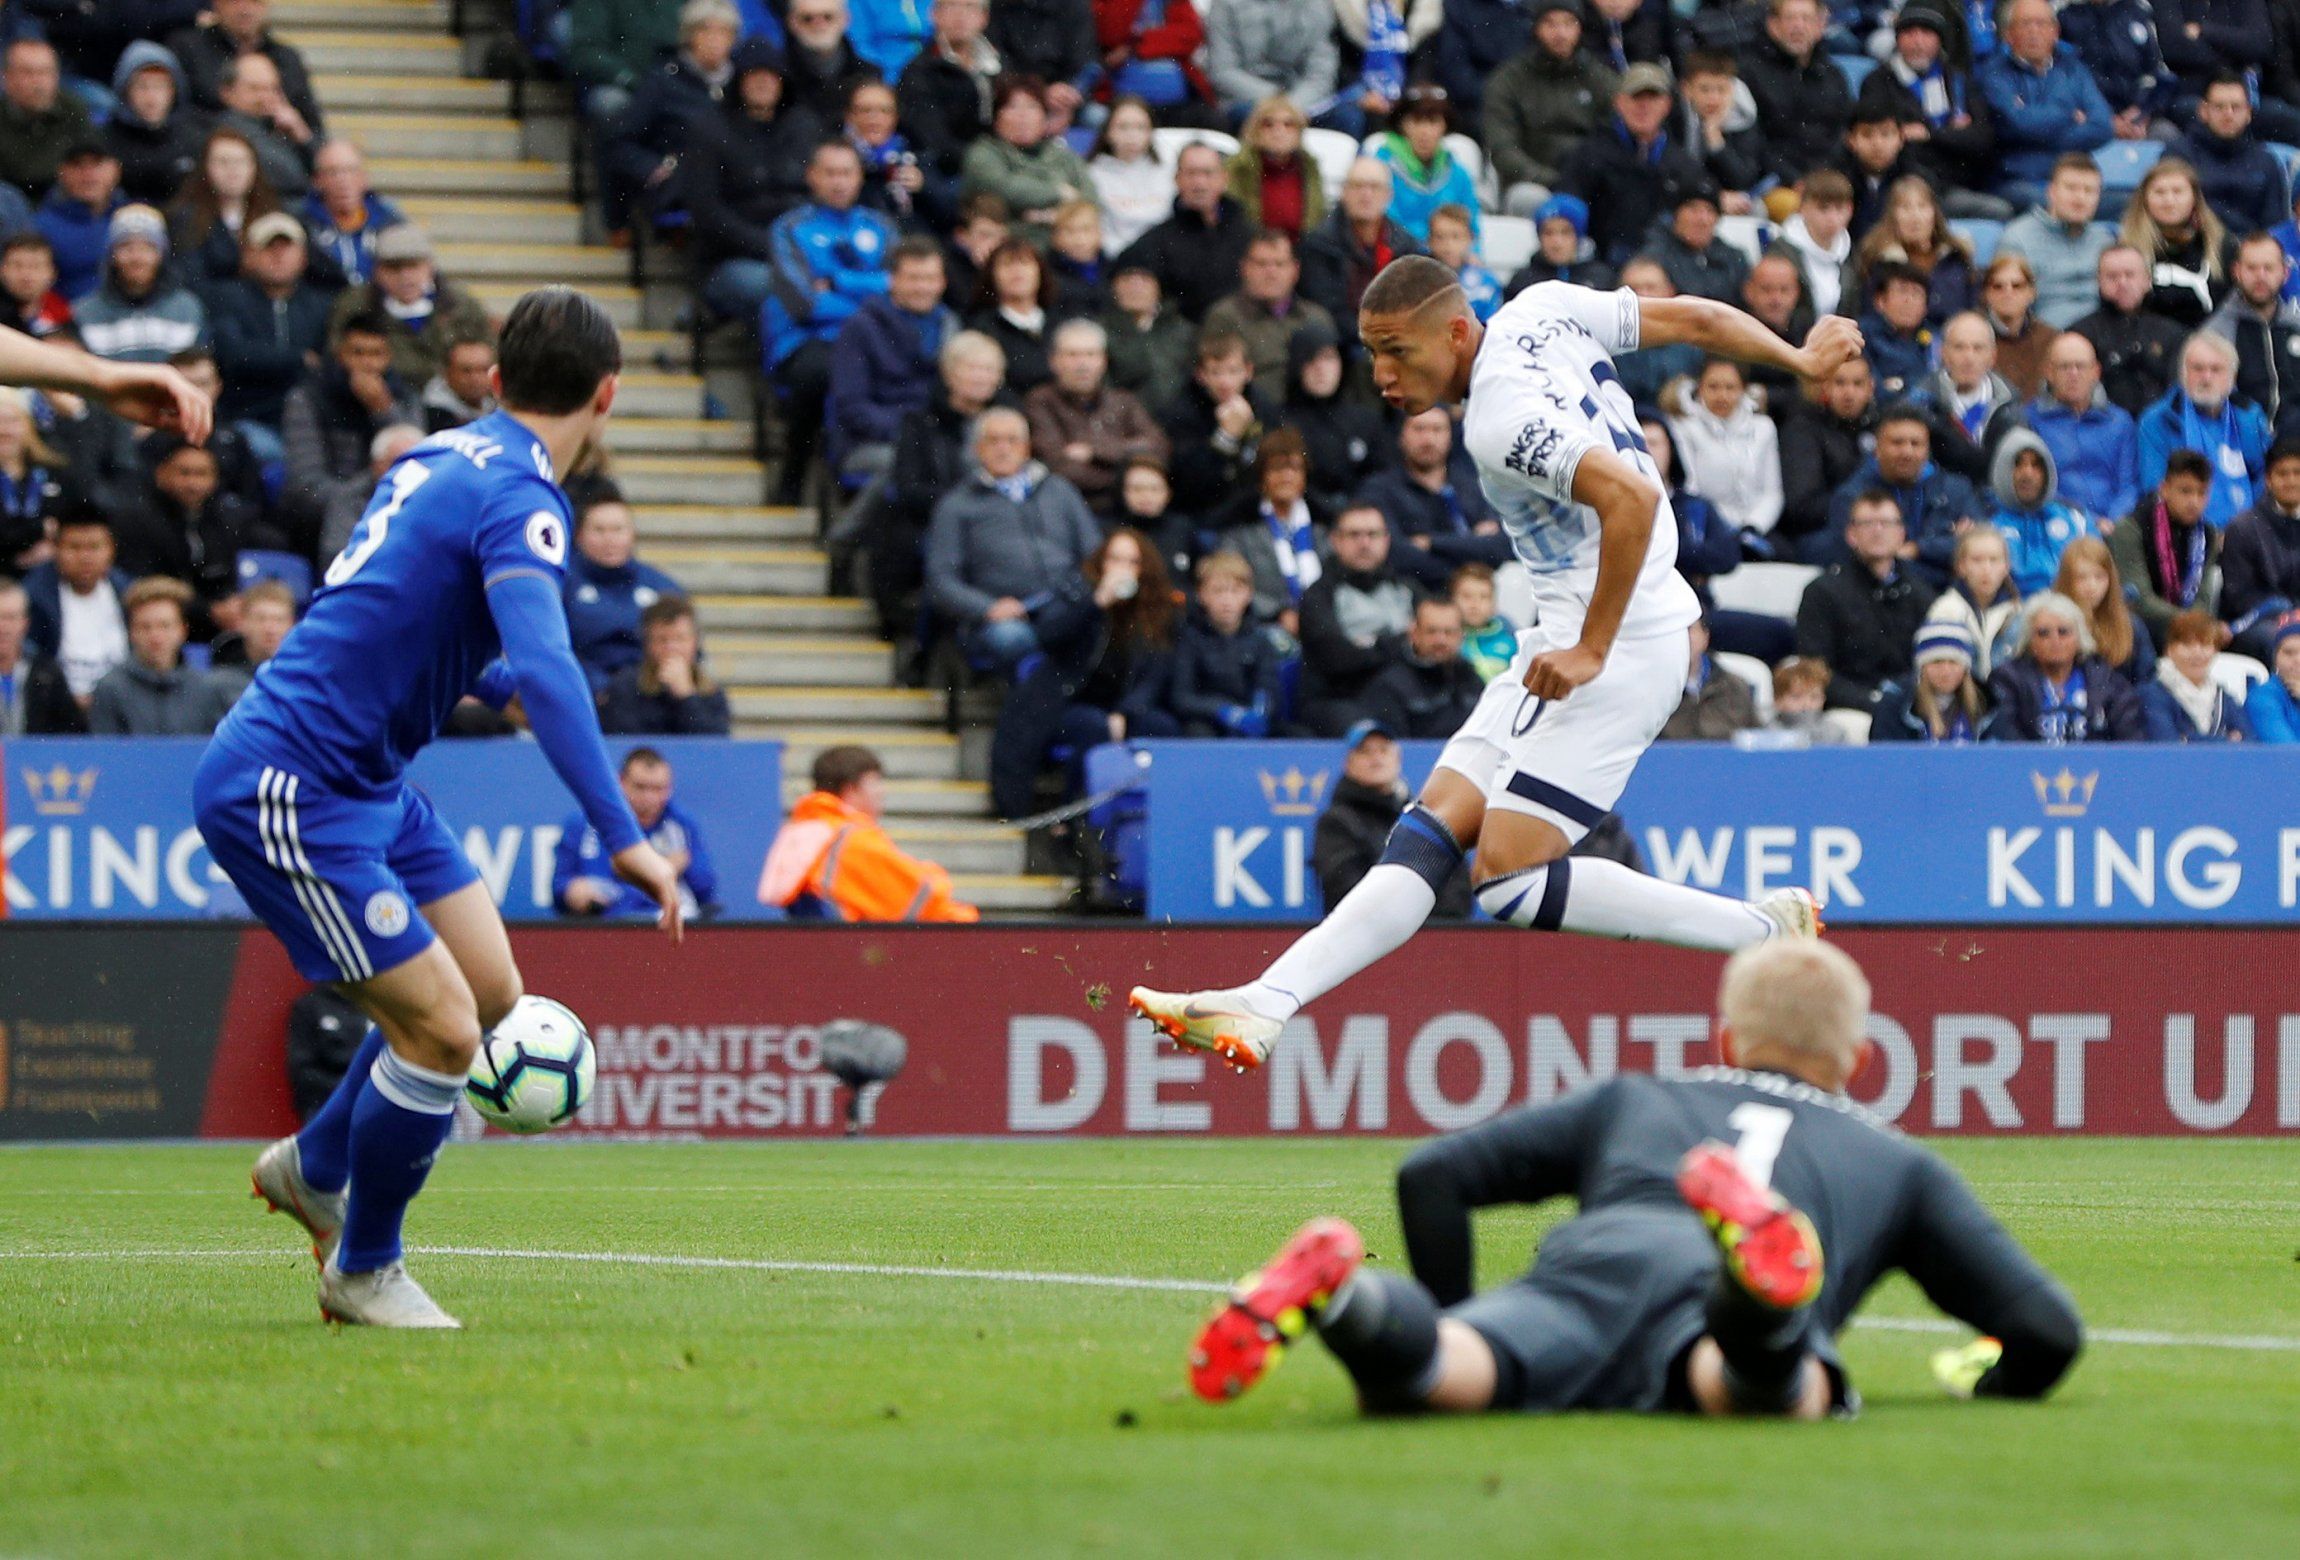 Everton attacker Richarlison scores against Leicester City